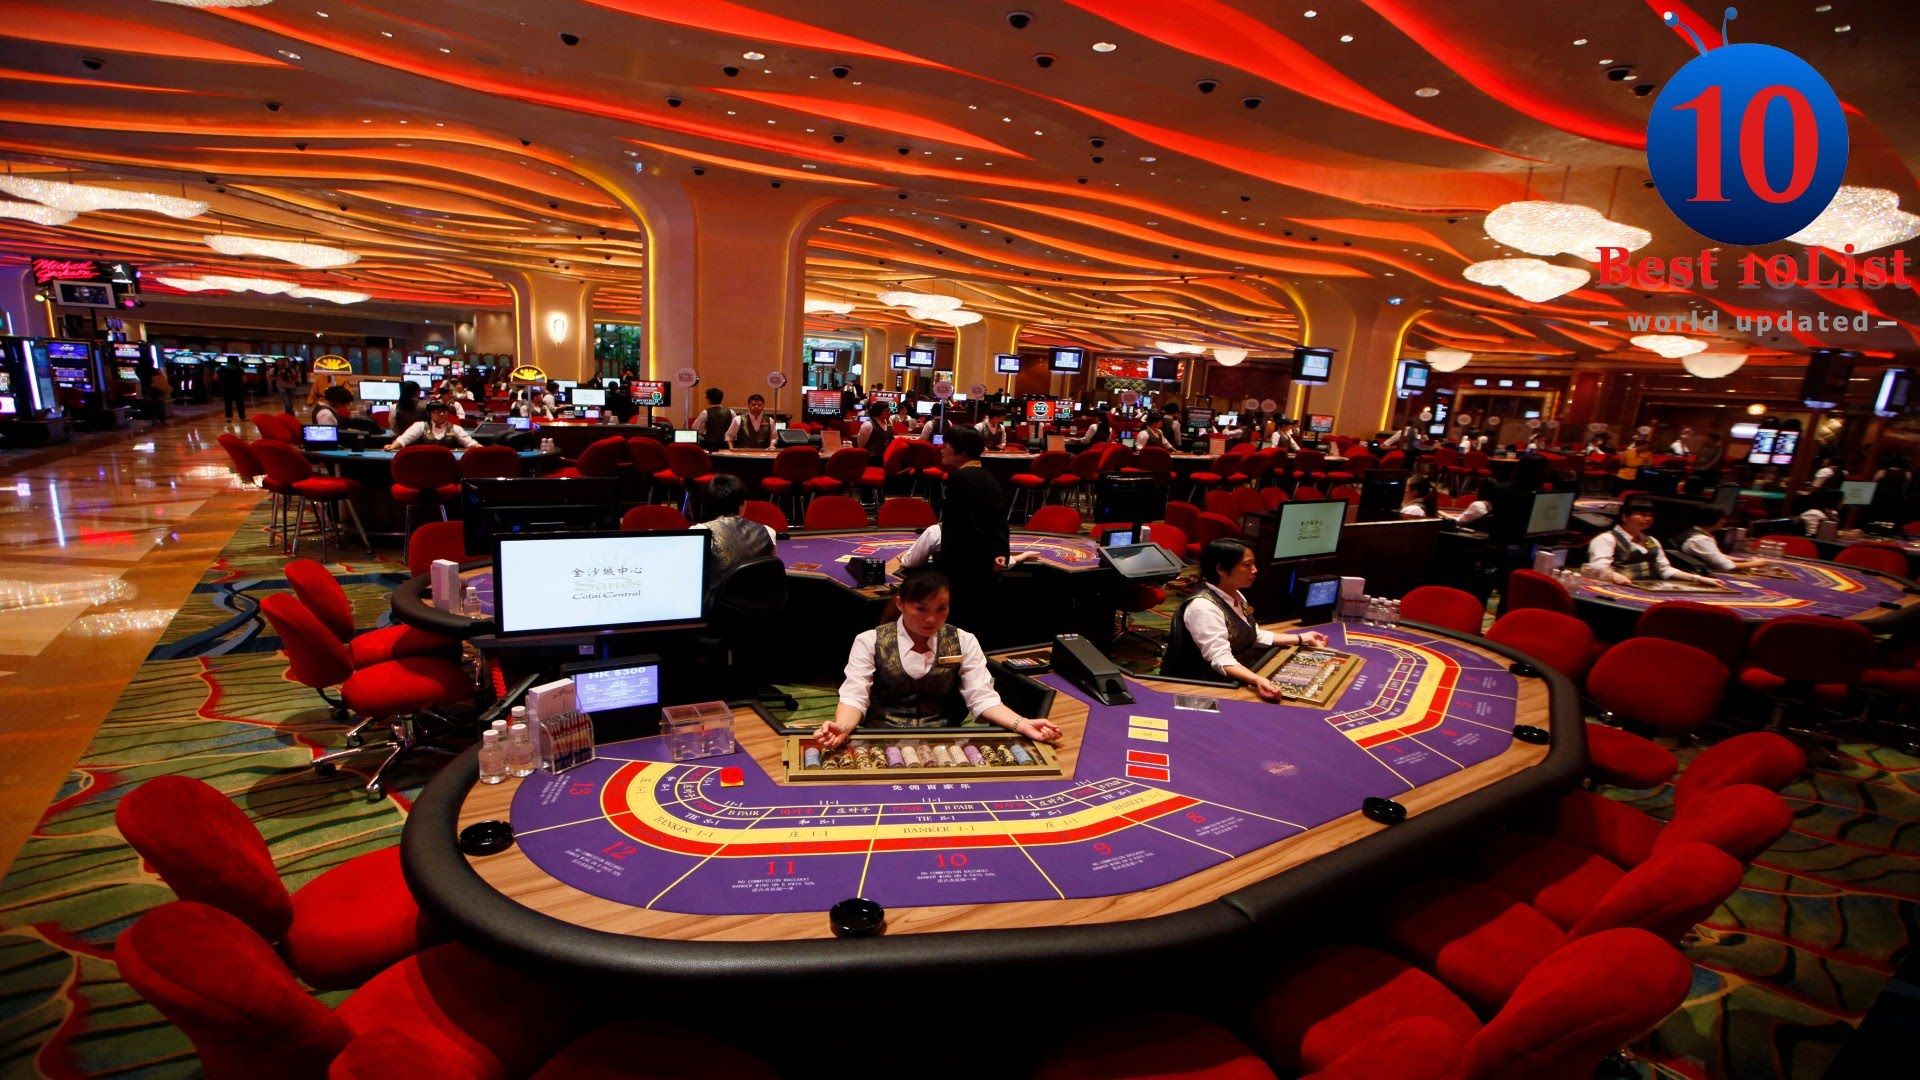 More on casinos